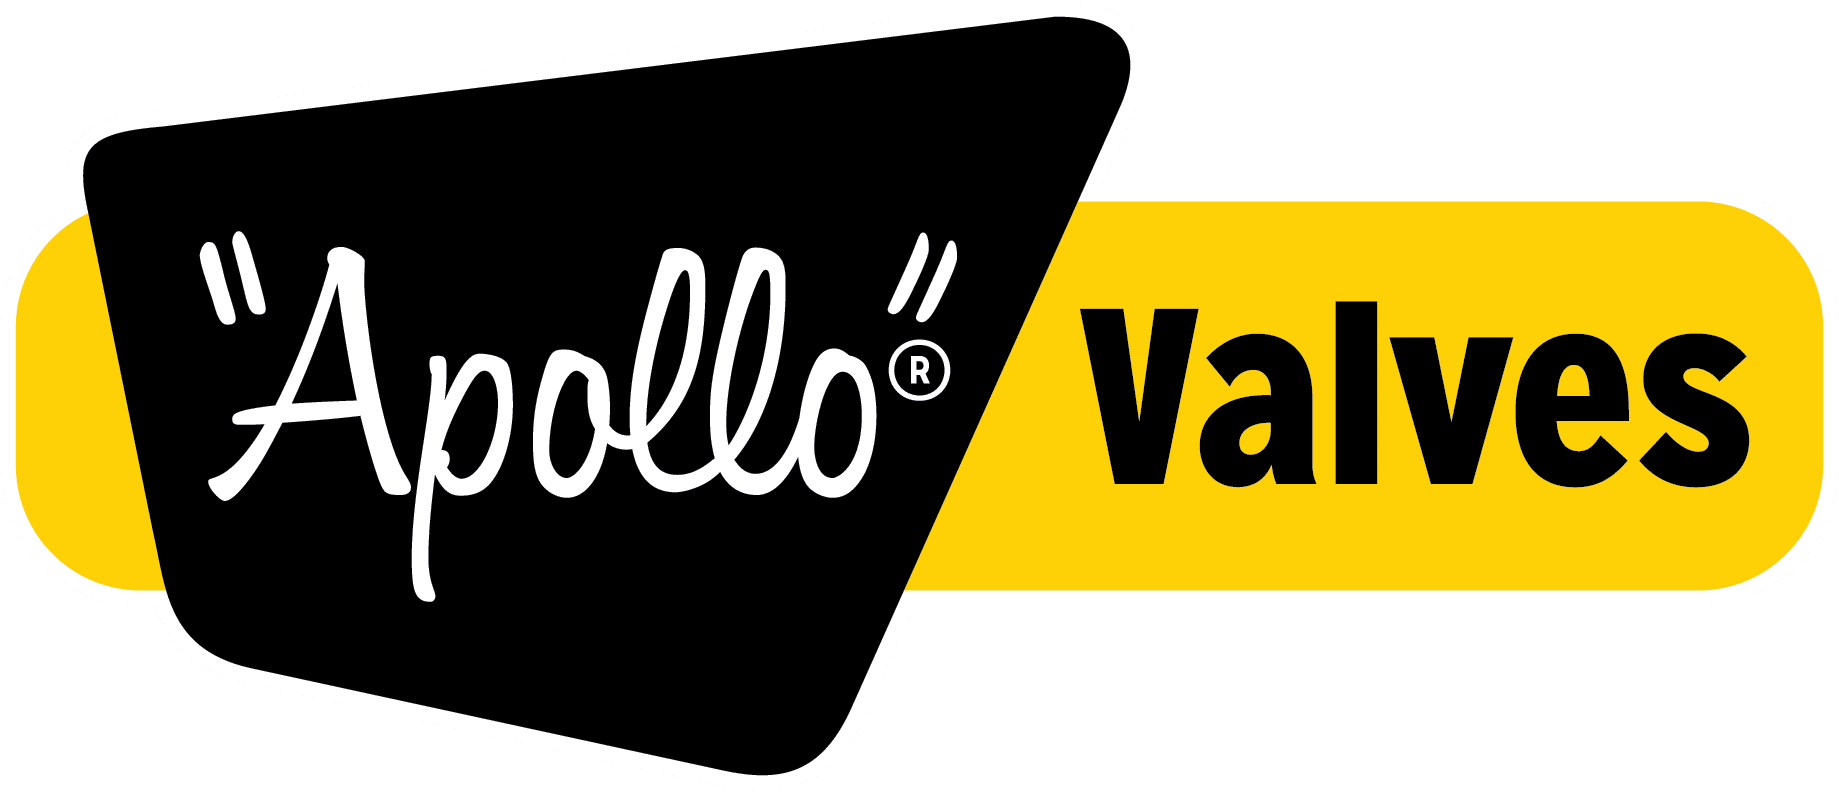 Apollo Valves logo